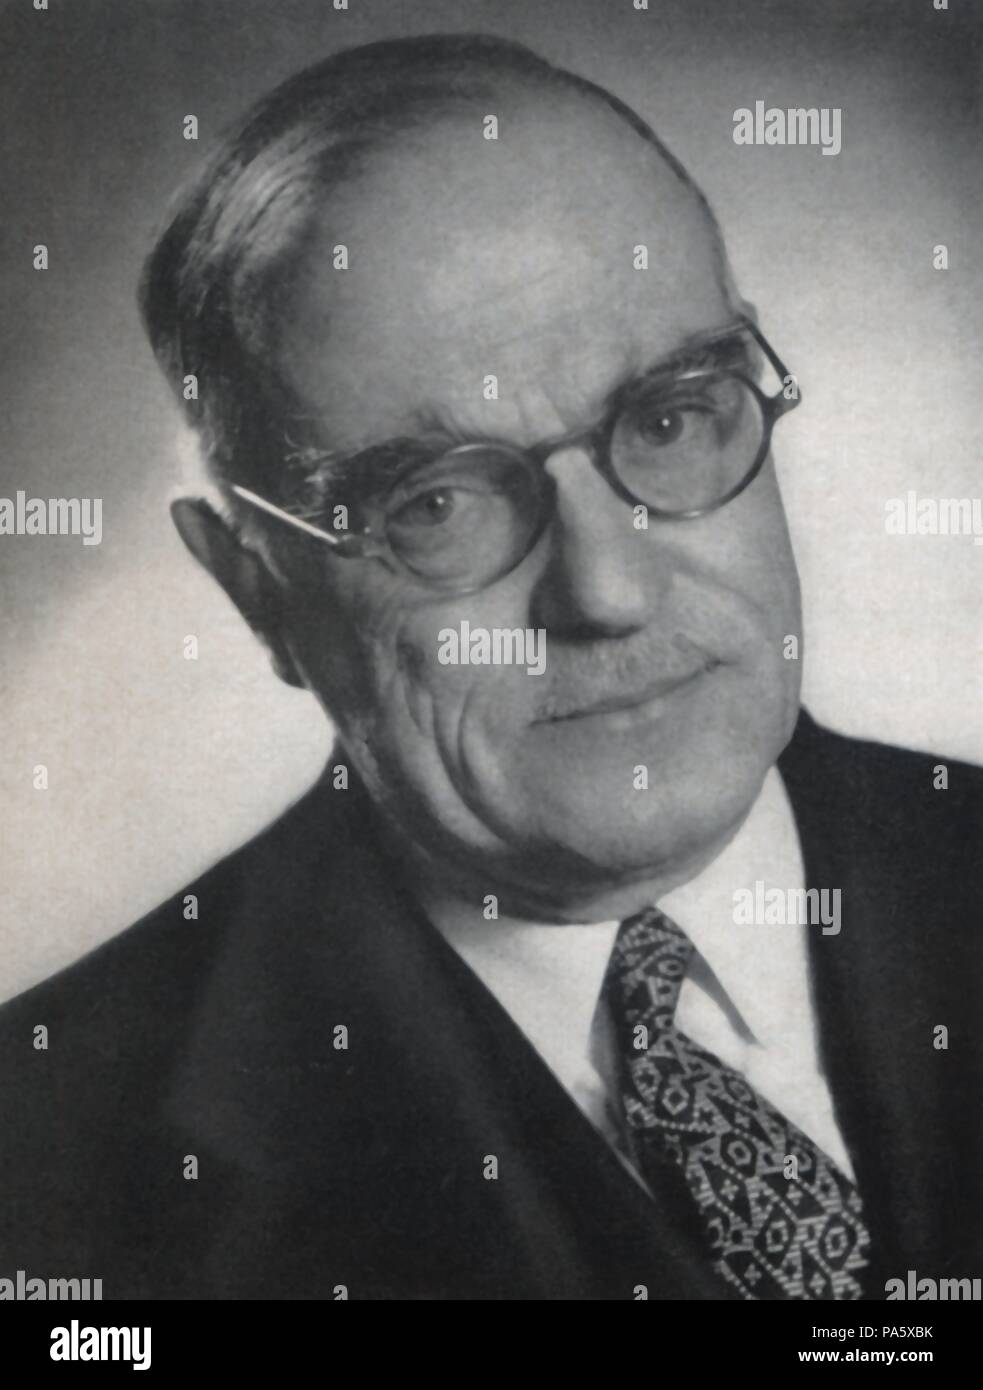 Thornton Niven Wilder (1897-1975), escritor norteamericano. Foto Stock